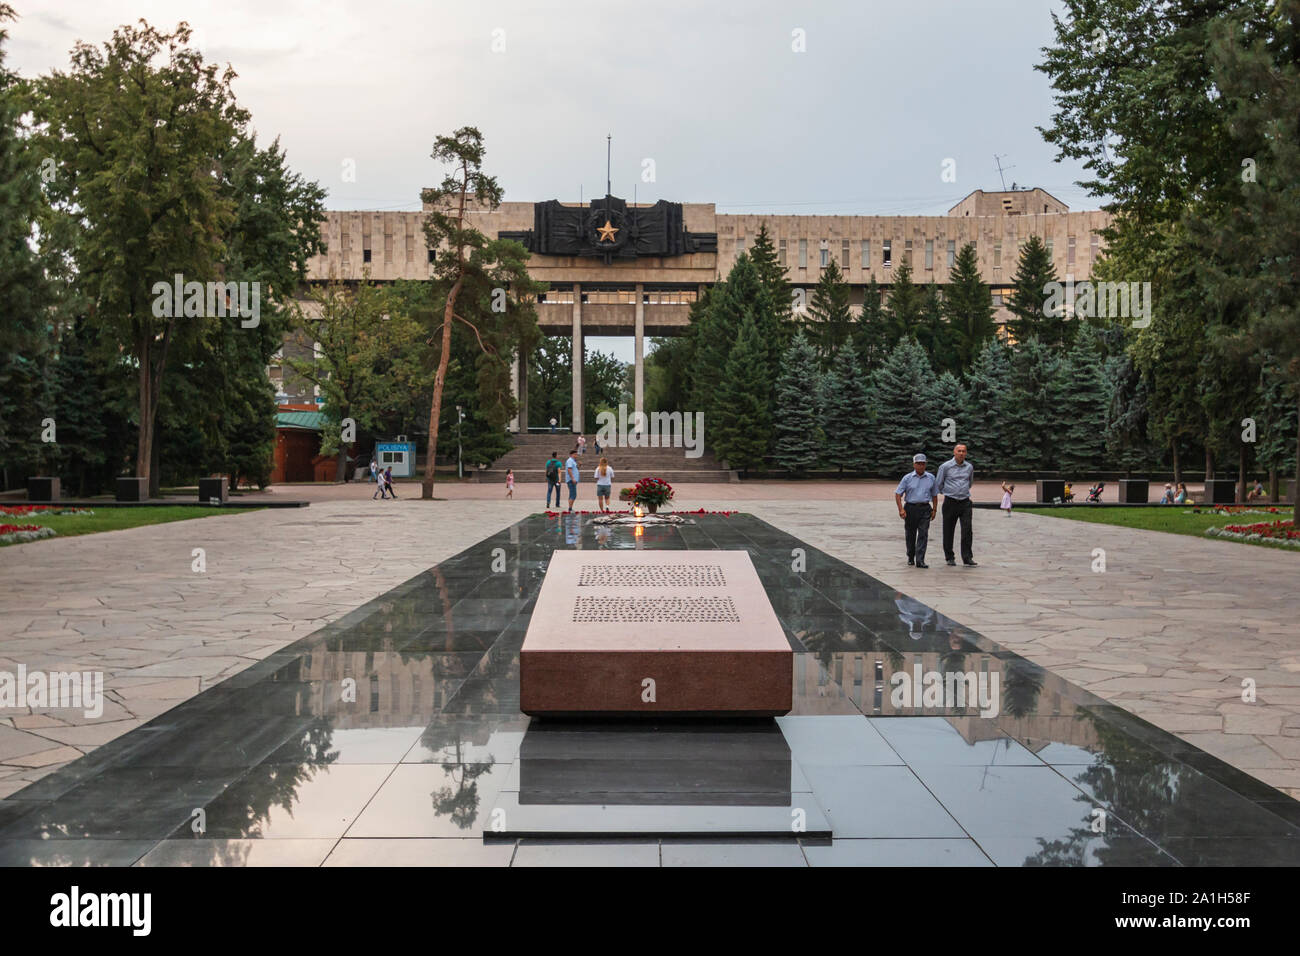 Almaty, Kazakhstan - August 9, 2019: Monument 'Memorial of Glory' in the Park of 28 Panfilov Guardsmen in Almaty Stock Photo